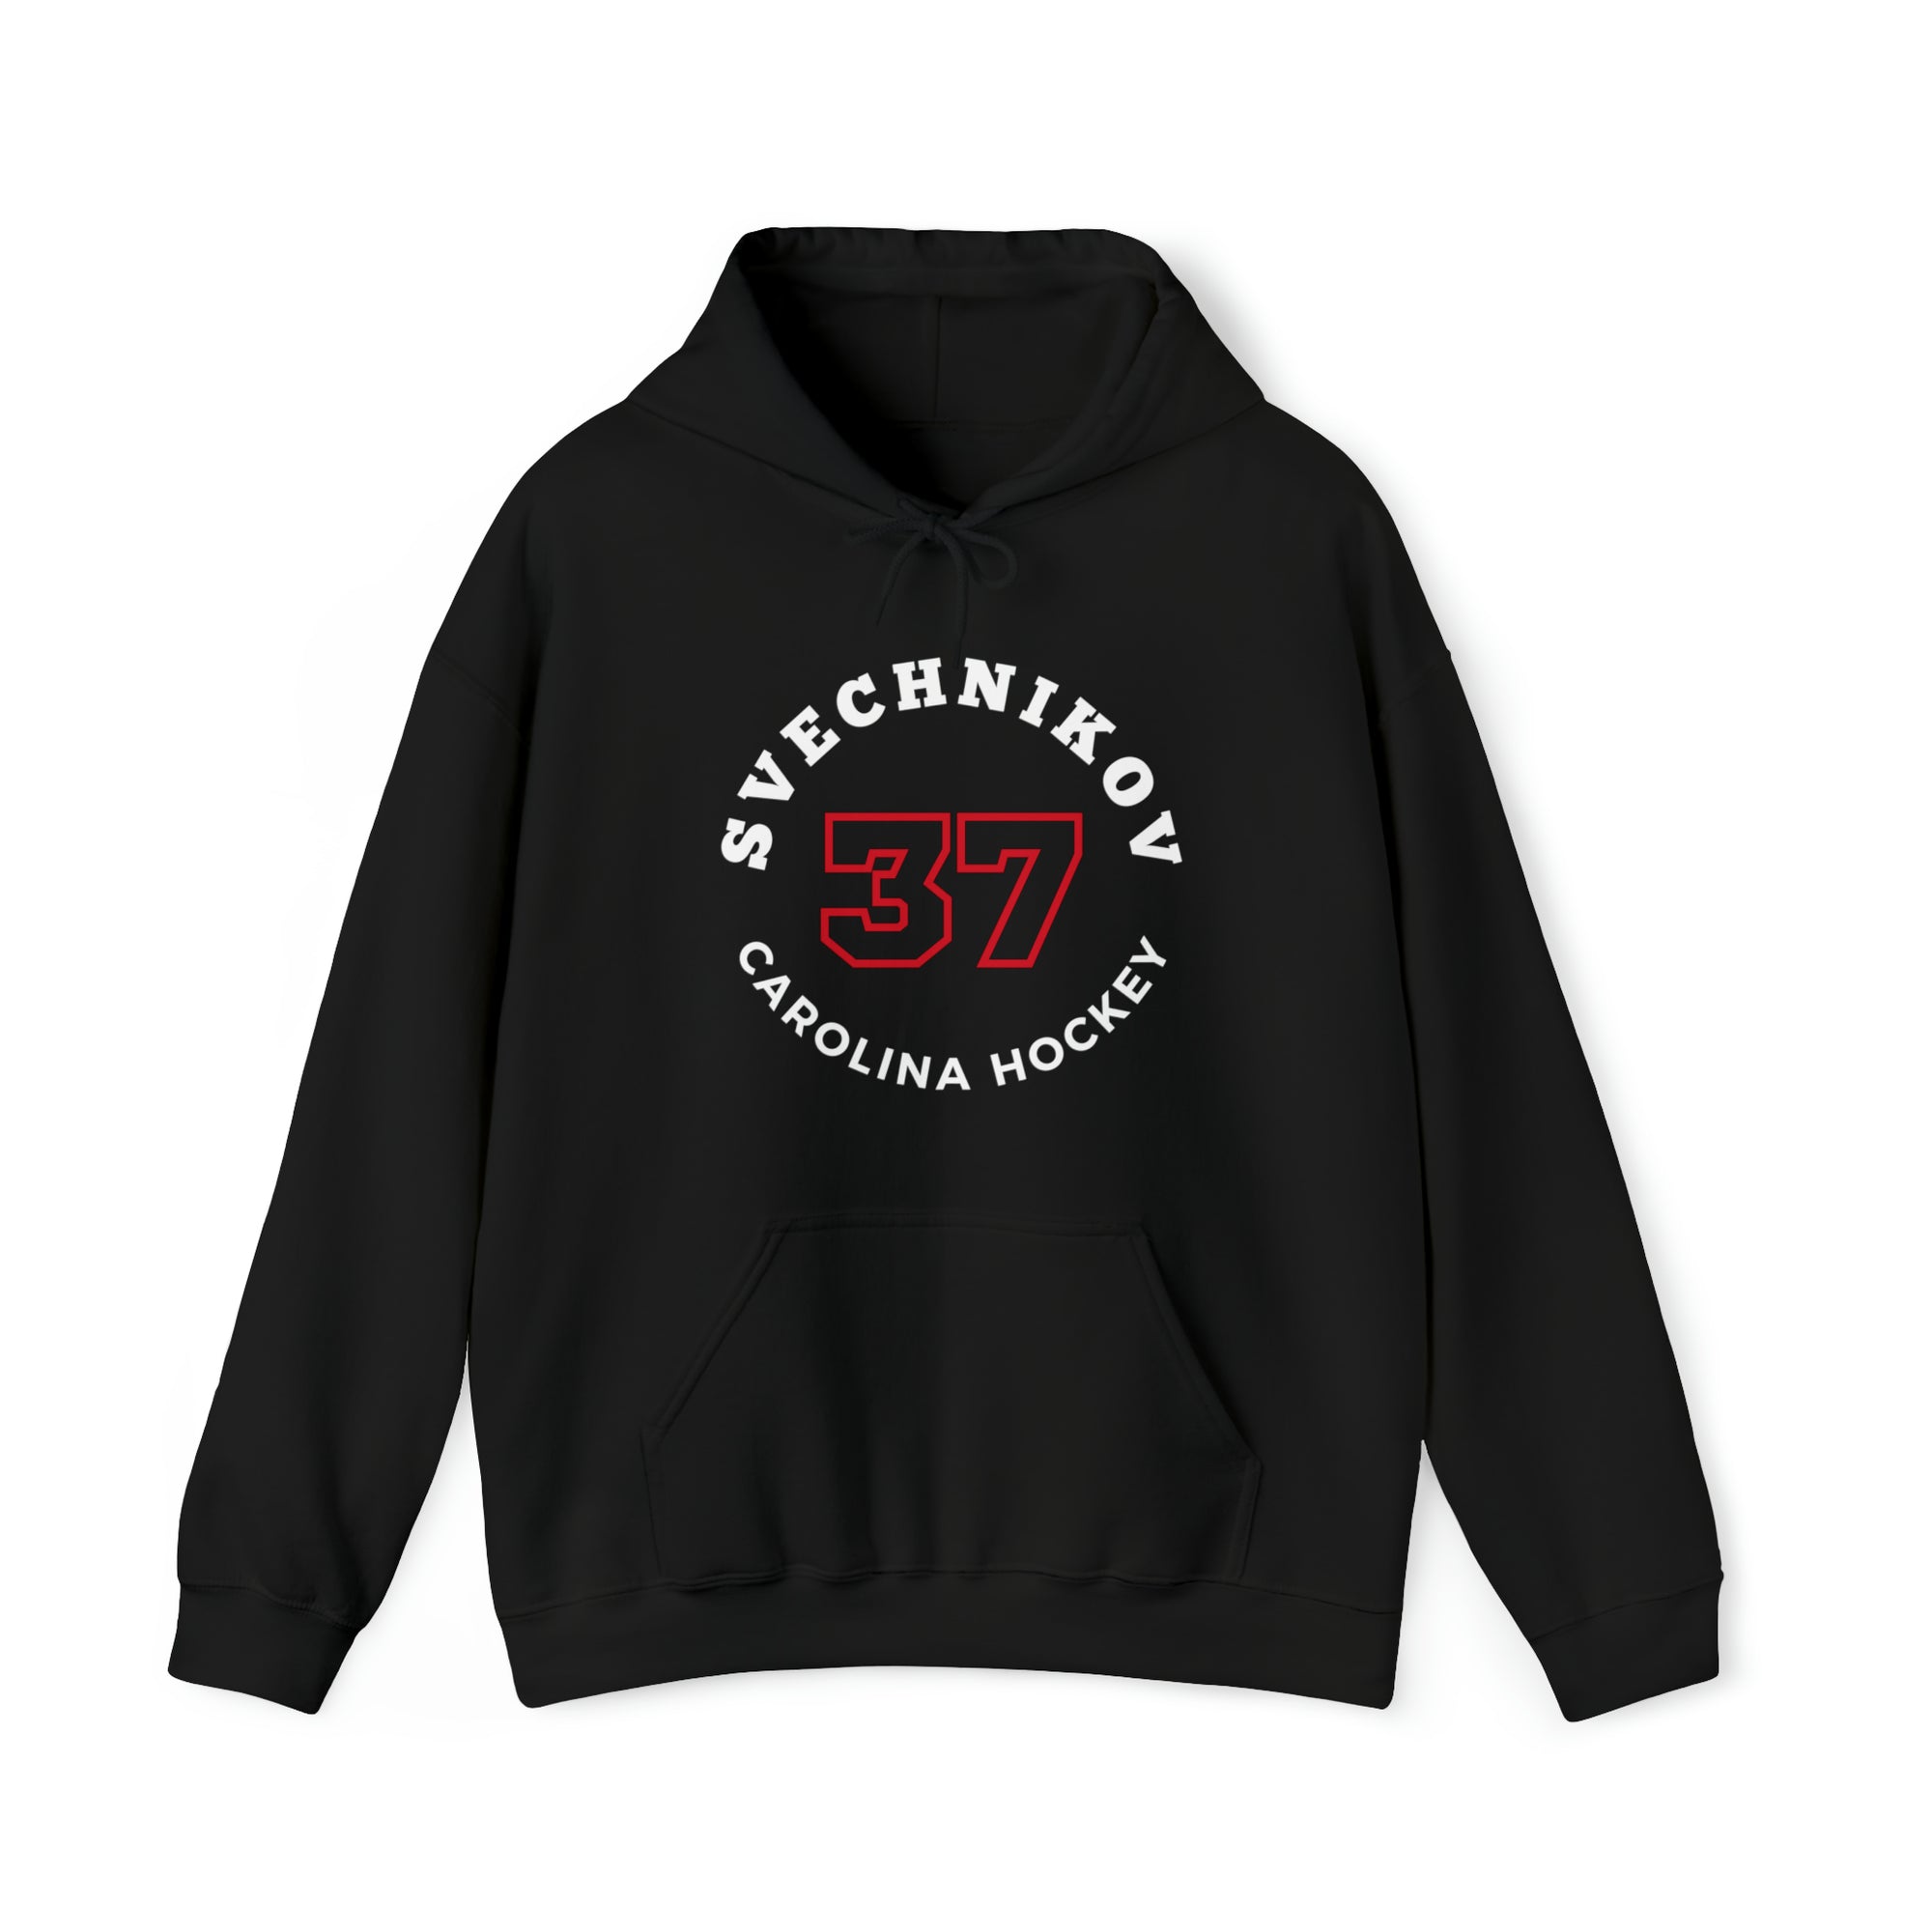 Svechnikov 37 Carolina Hockey Number Arch Design Unisex Hooded Sweatshirt